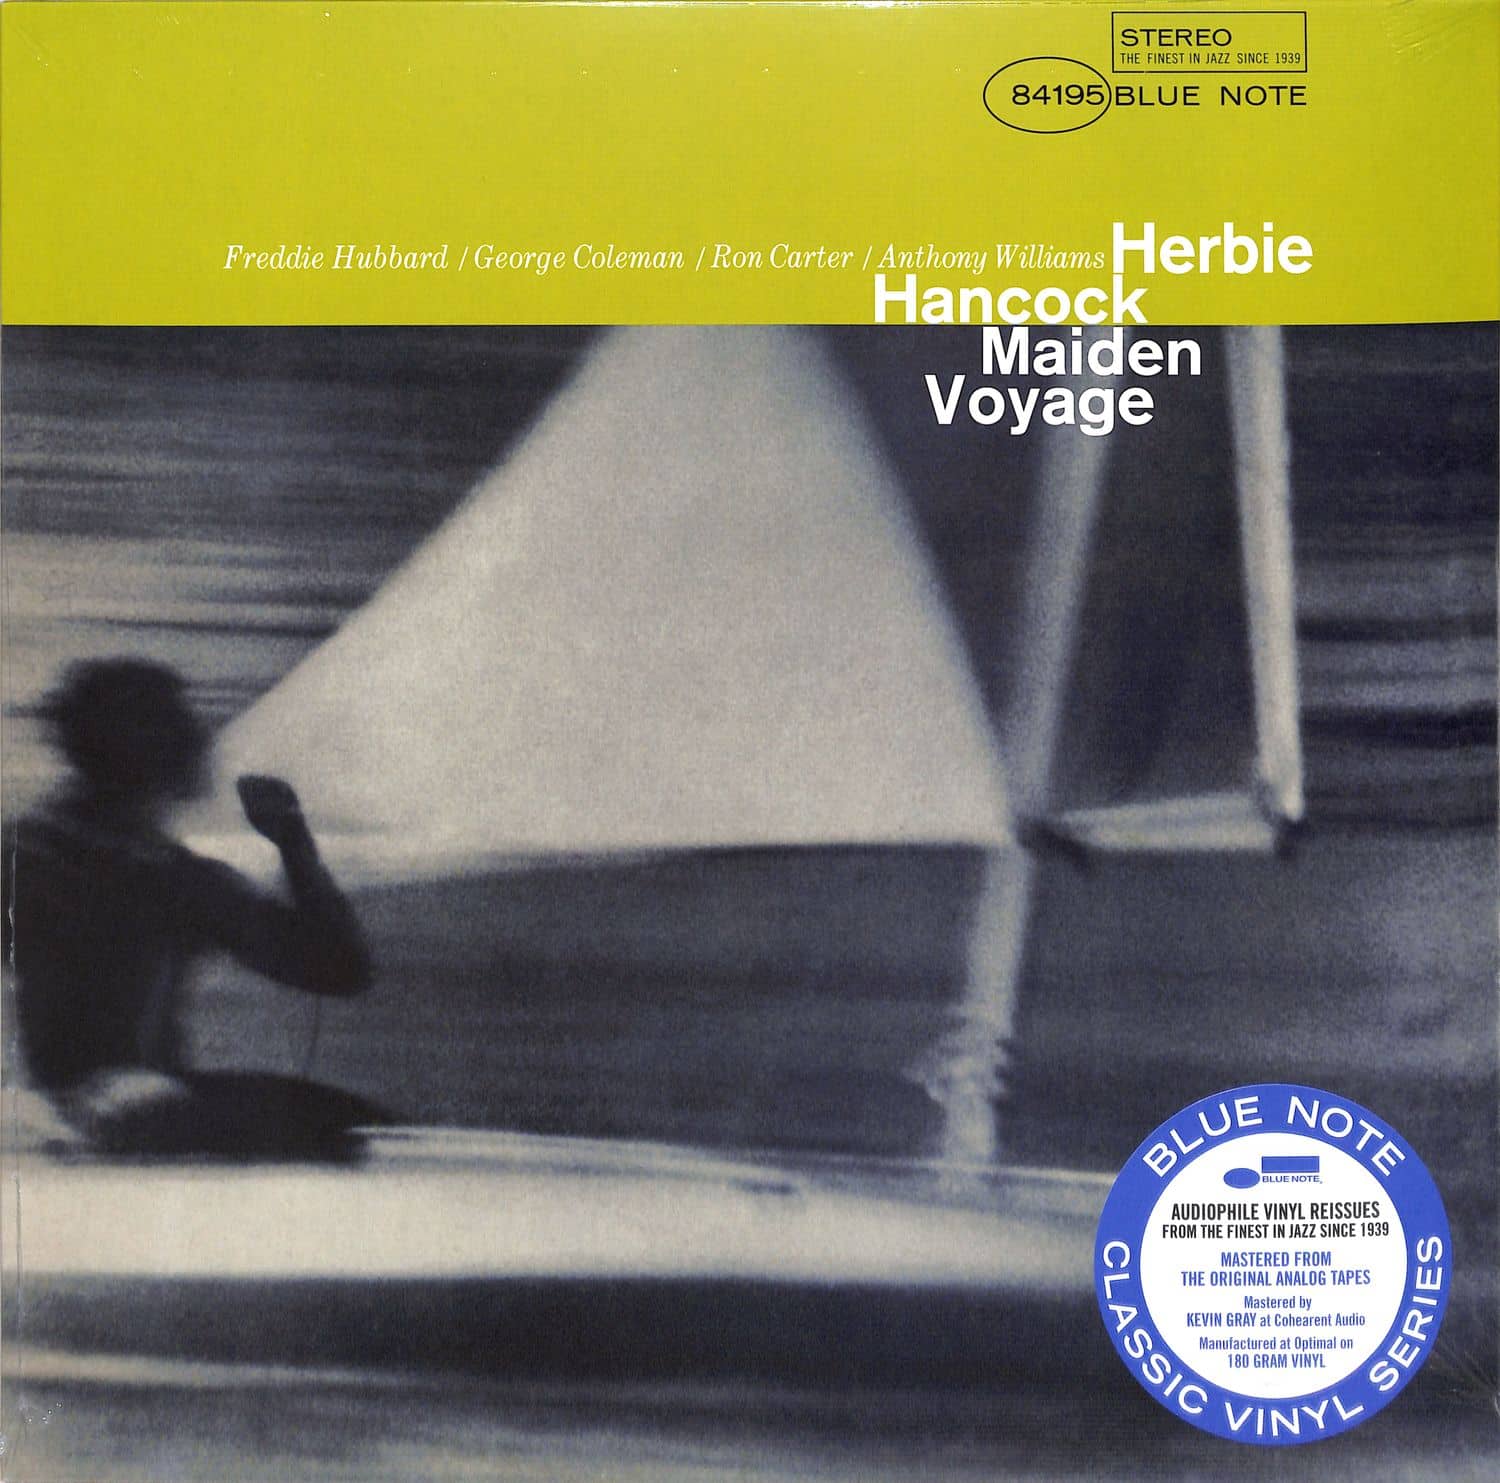 Herbie Hancock - MAIDEN VOYAGE 